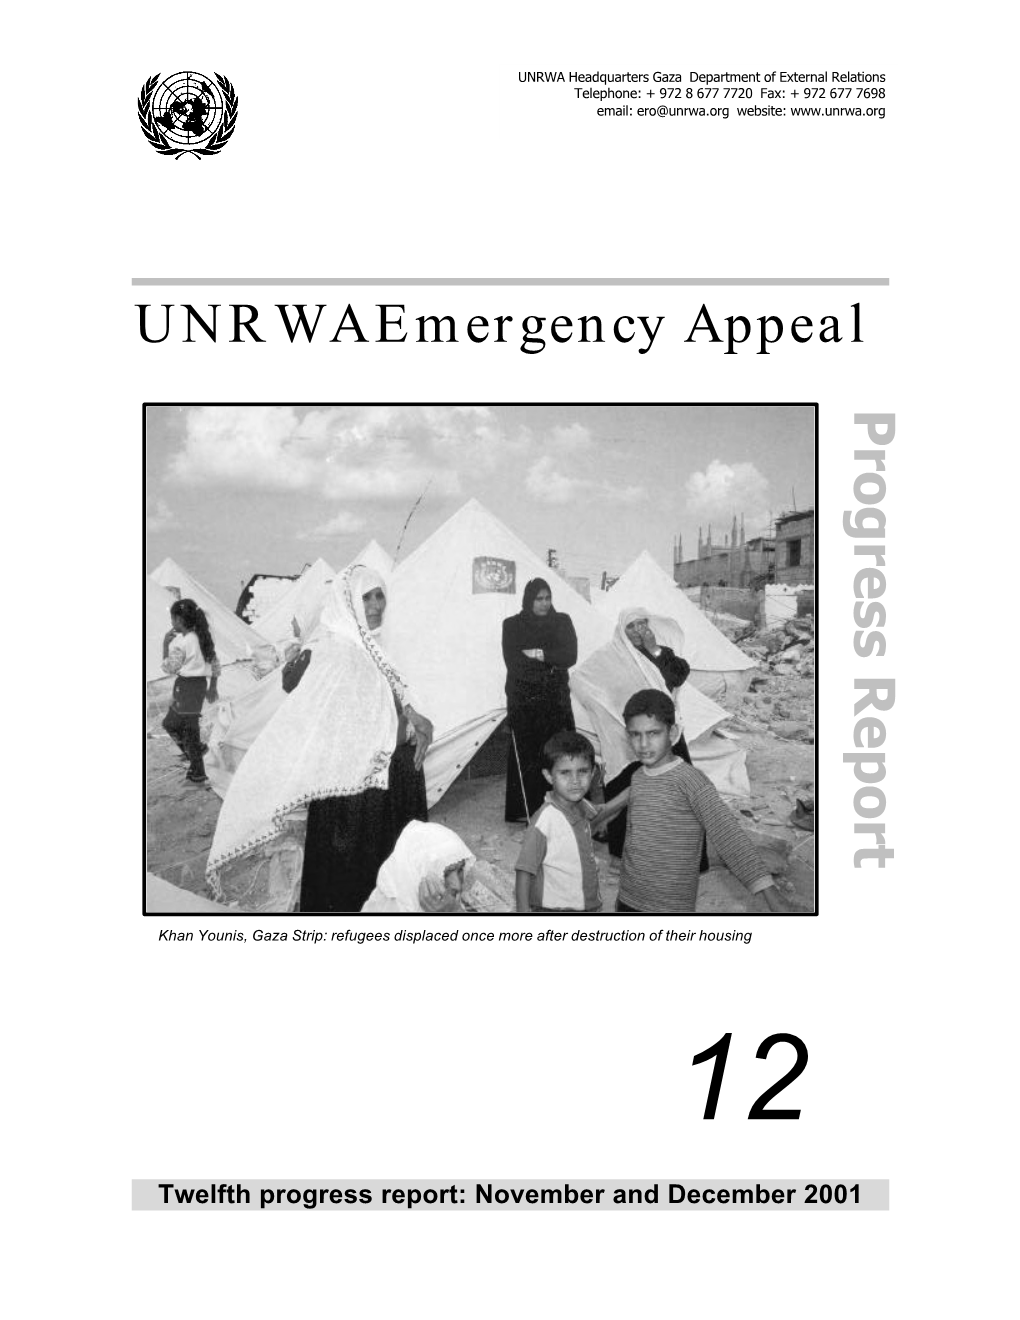 UNRWA Emergency Appeal